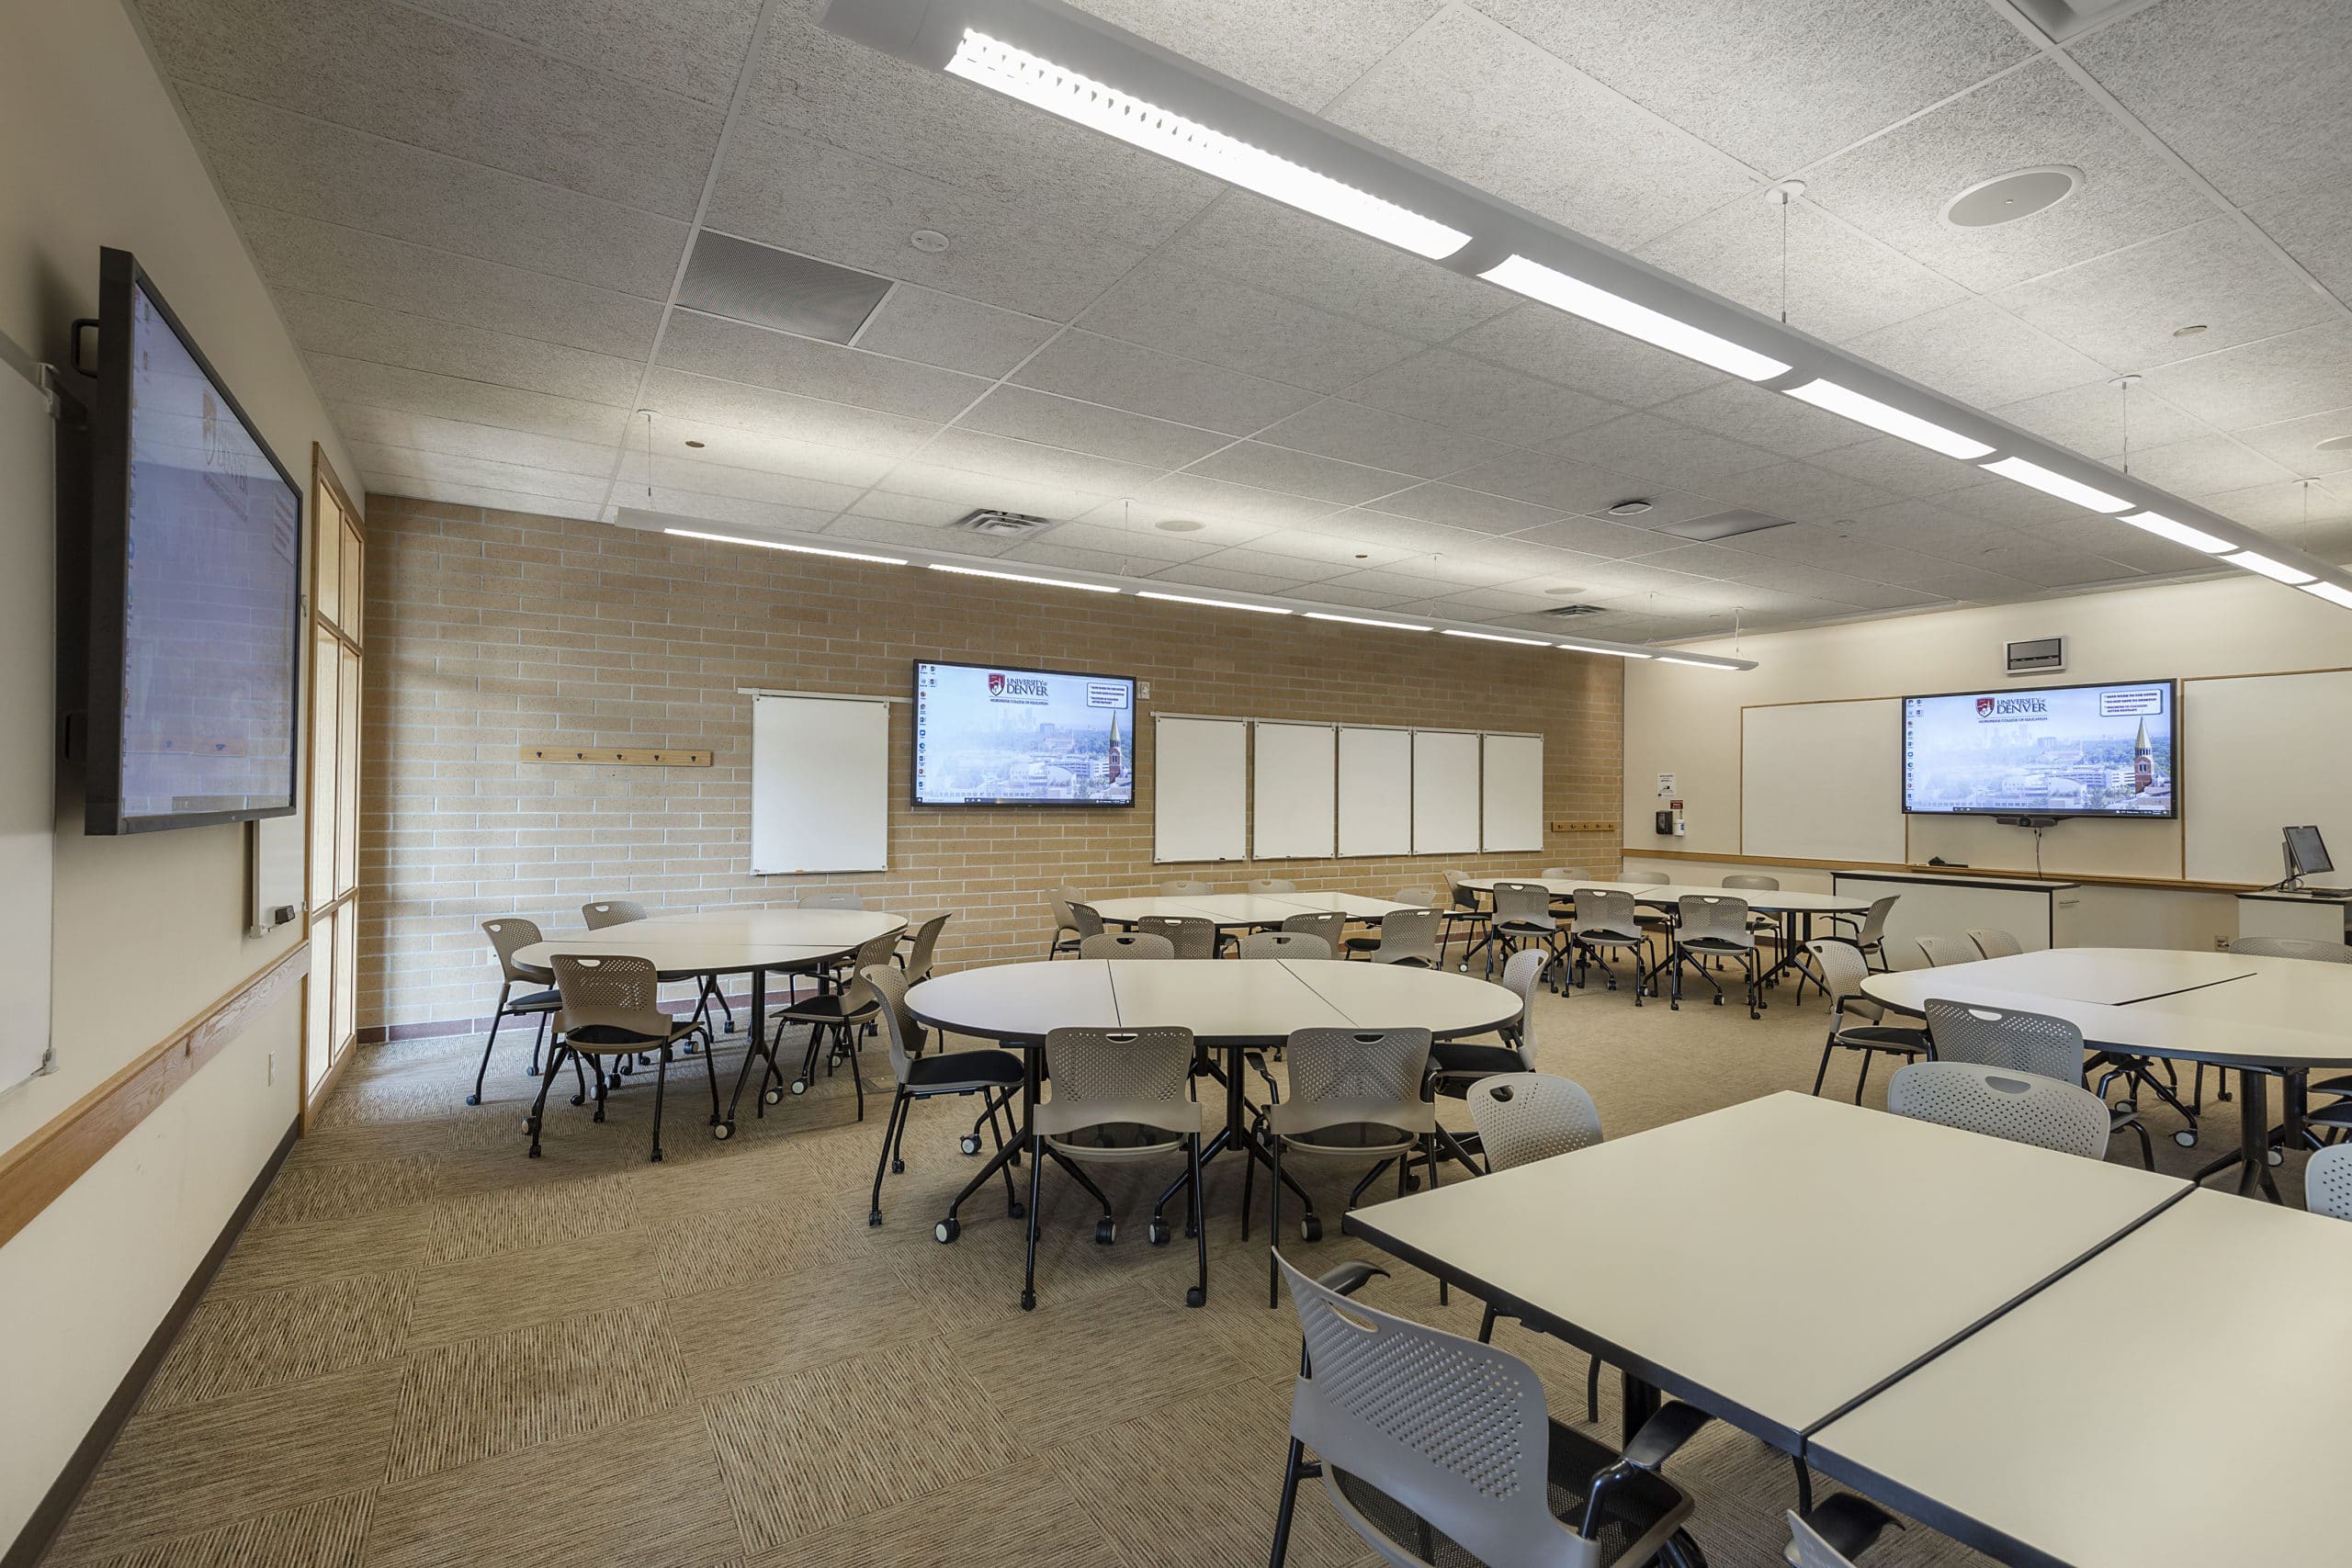 Ruffatto Hall Large Classroom